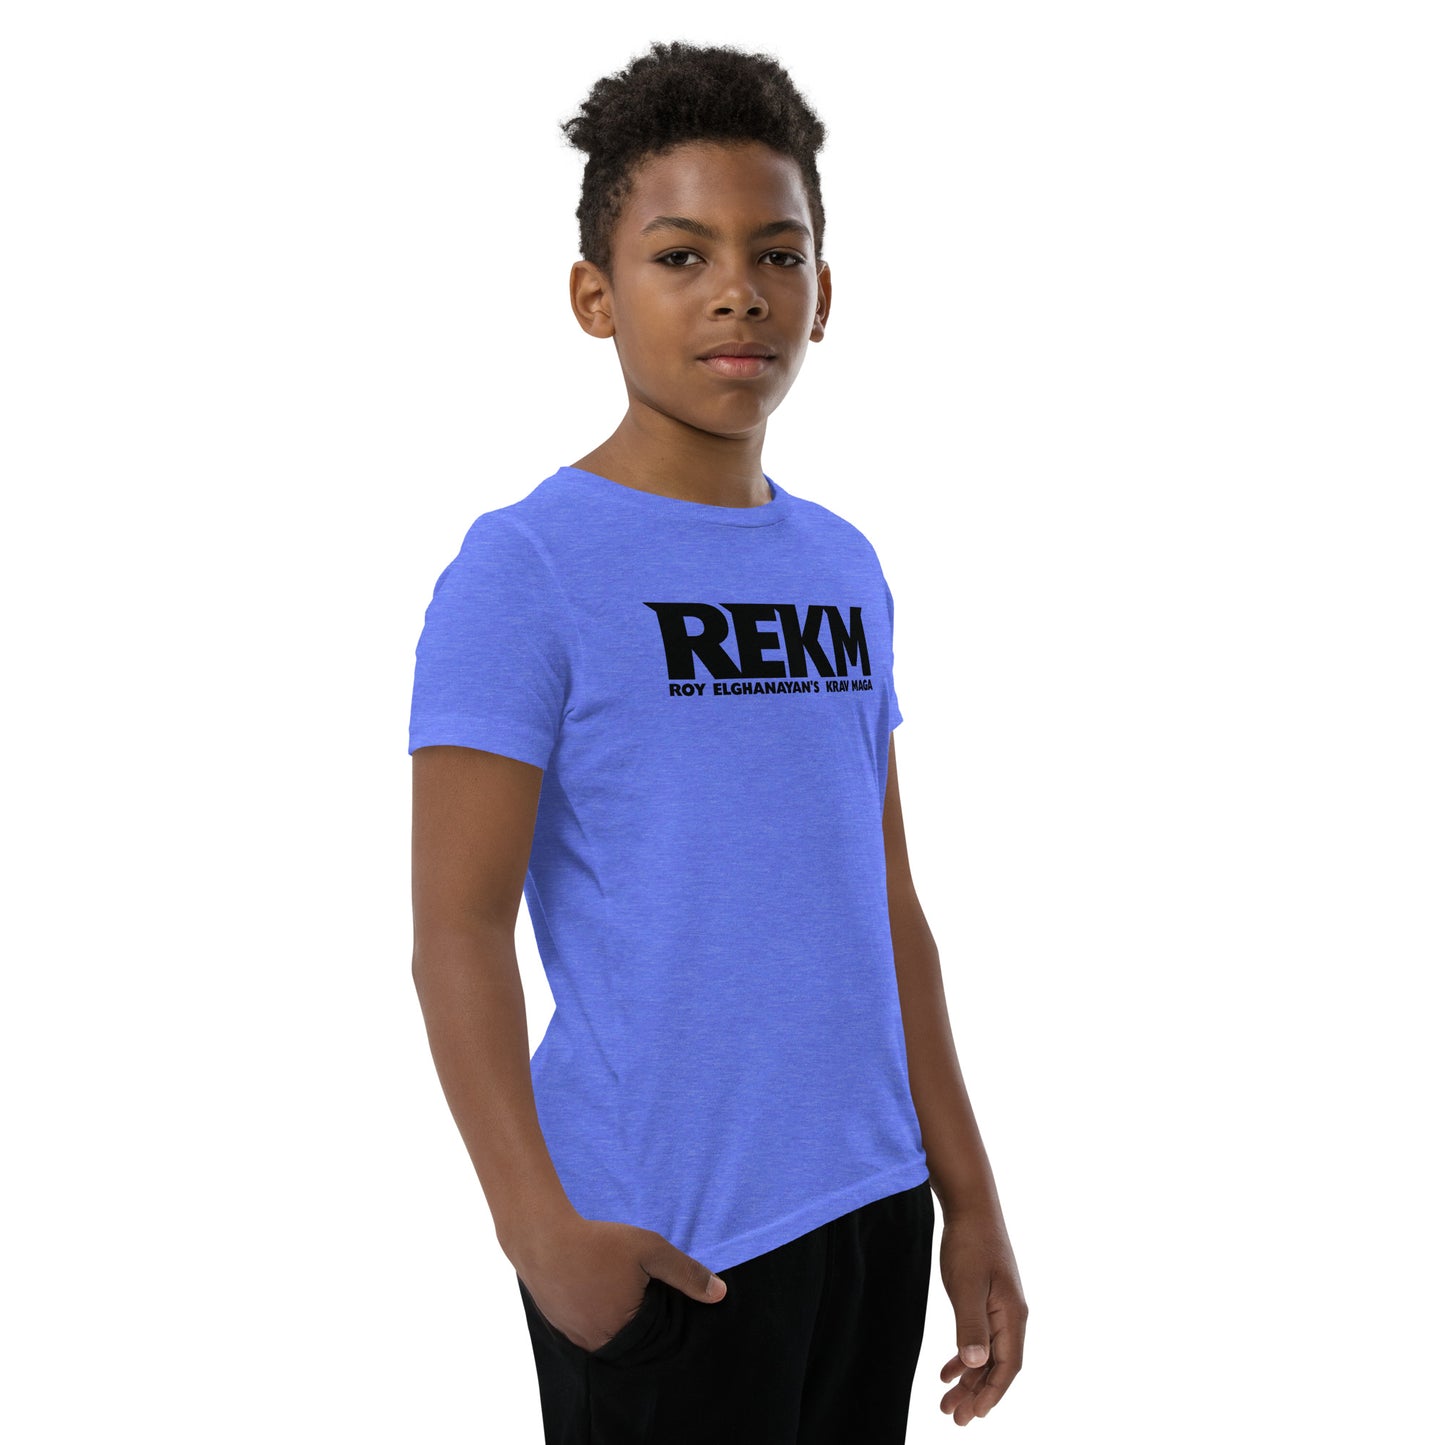 Youth Unisex REKM Short Sleeve T-Shirt